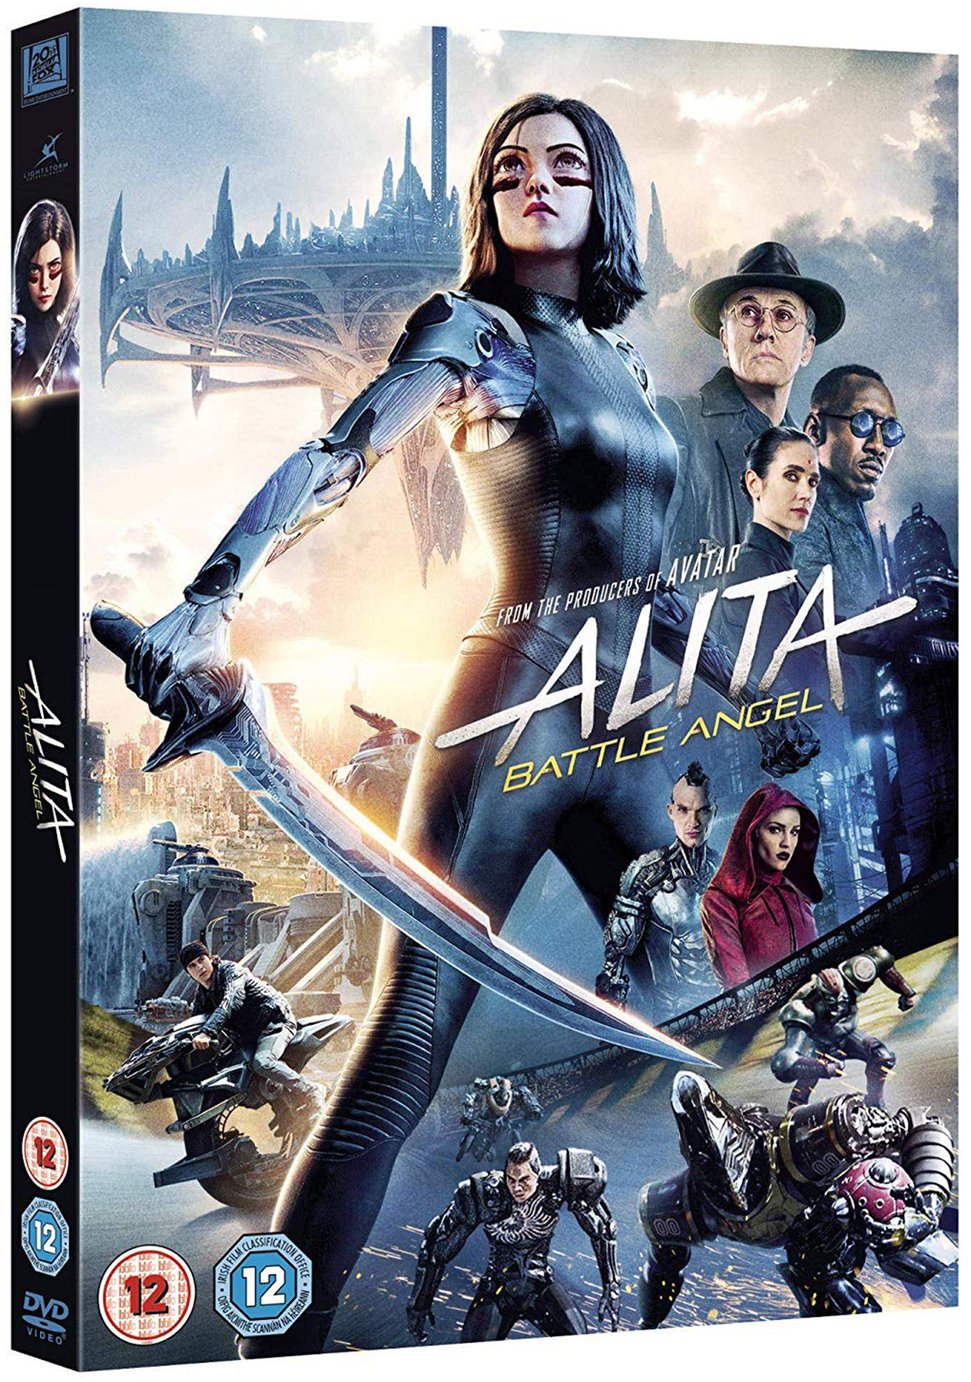 Alita: Battle Angel DVD Review